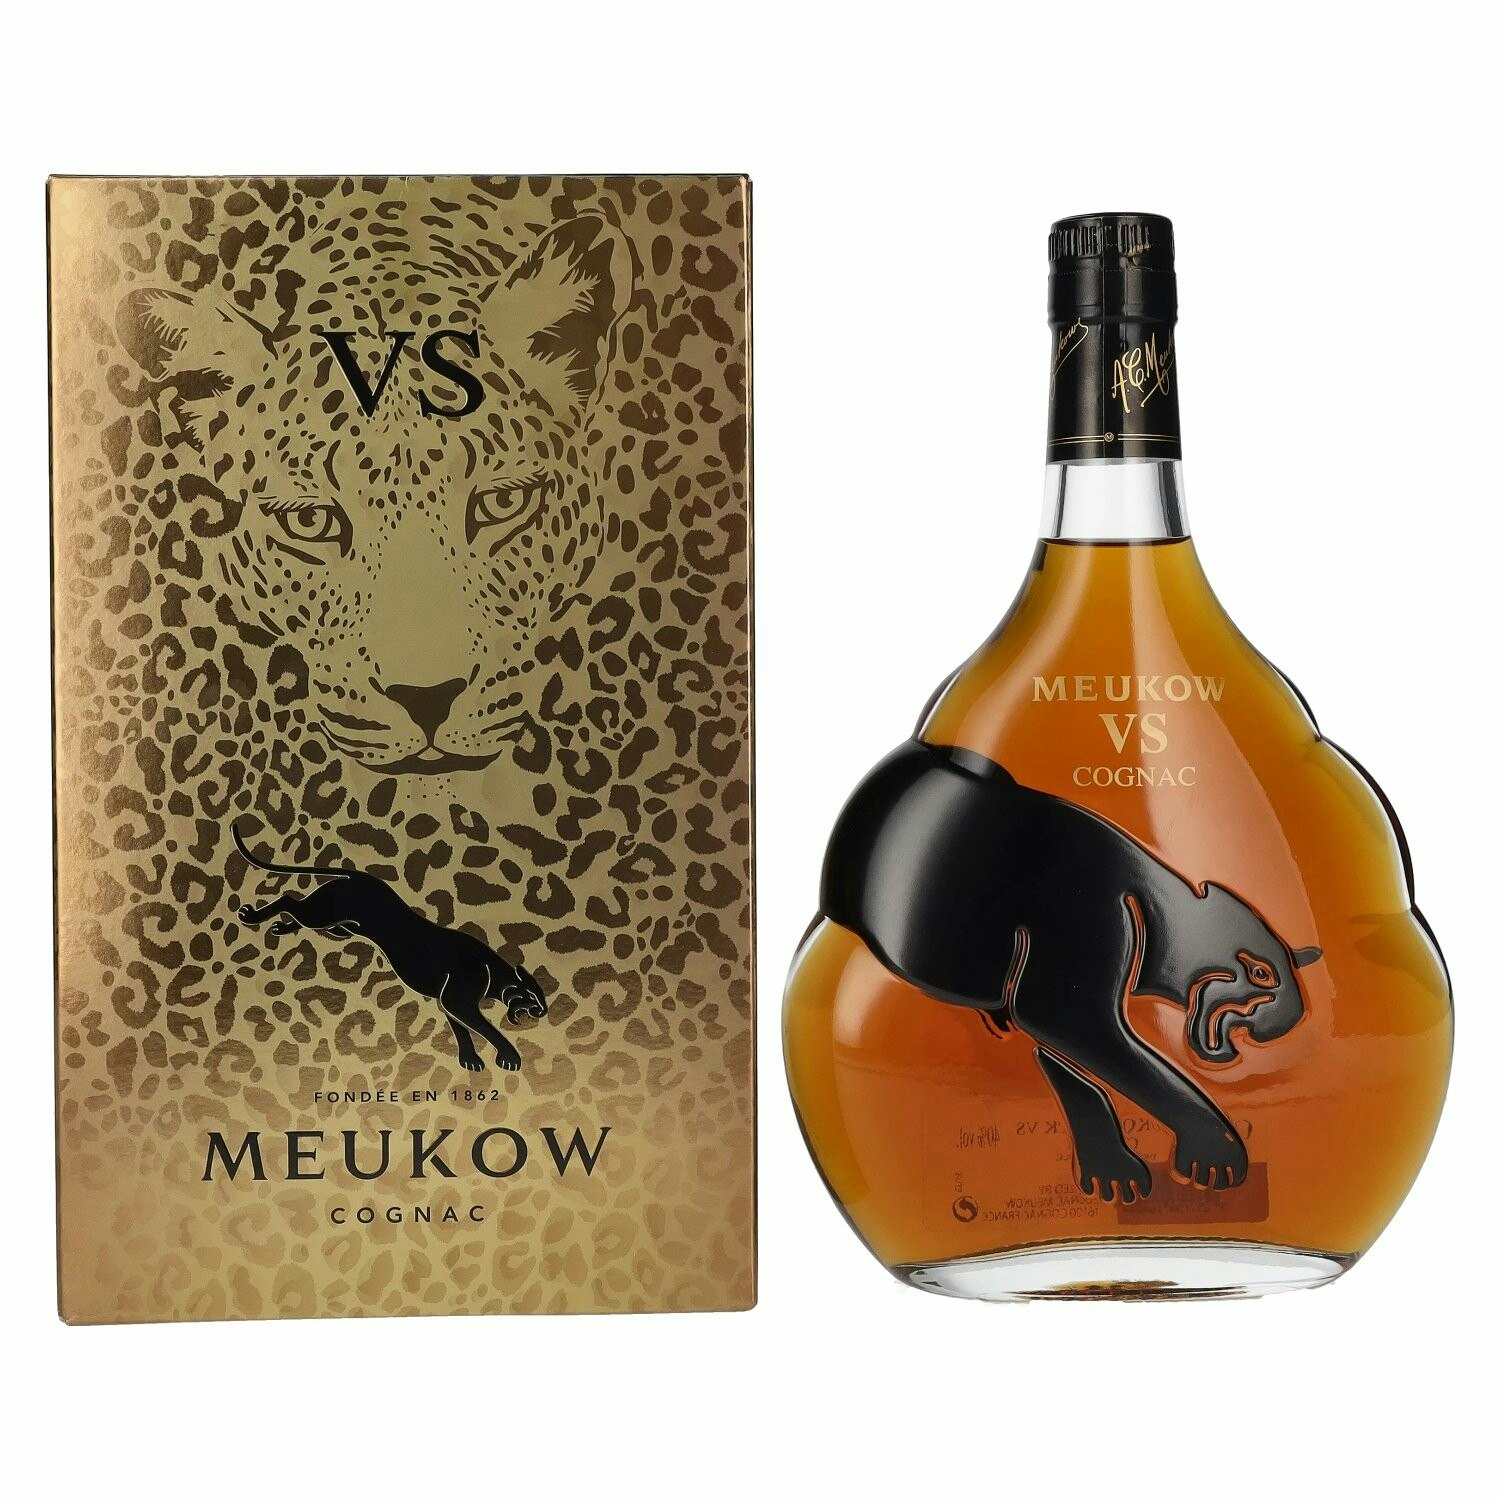 Meukow VS Cognac 40% Vol. 0,7l in Giftbox